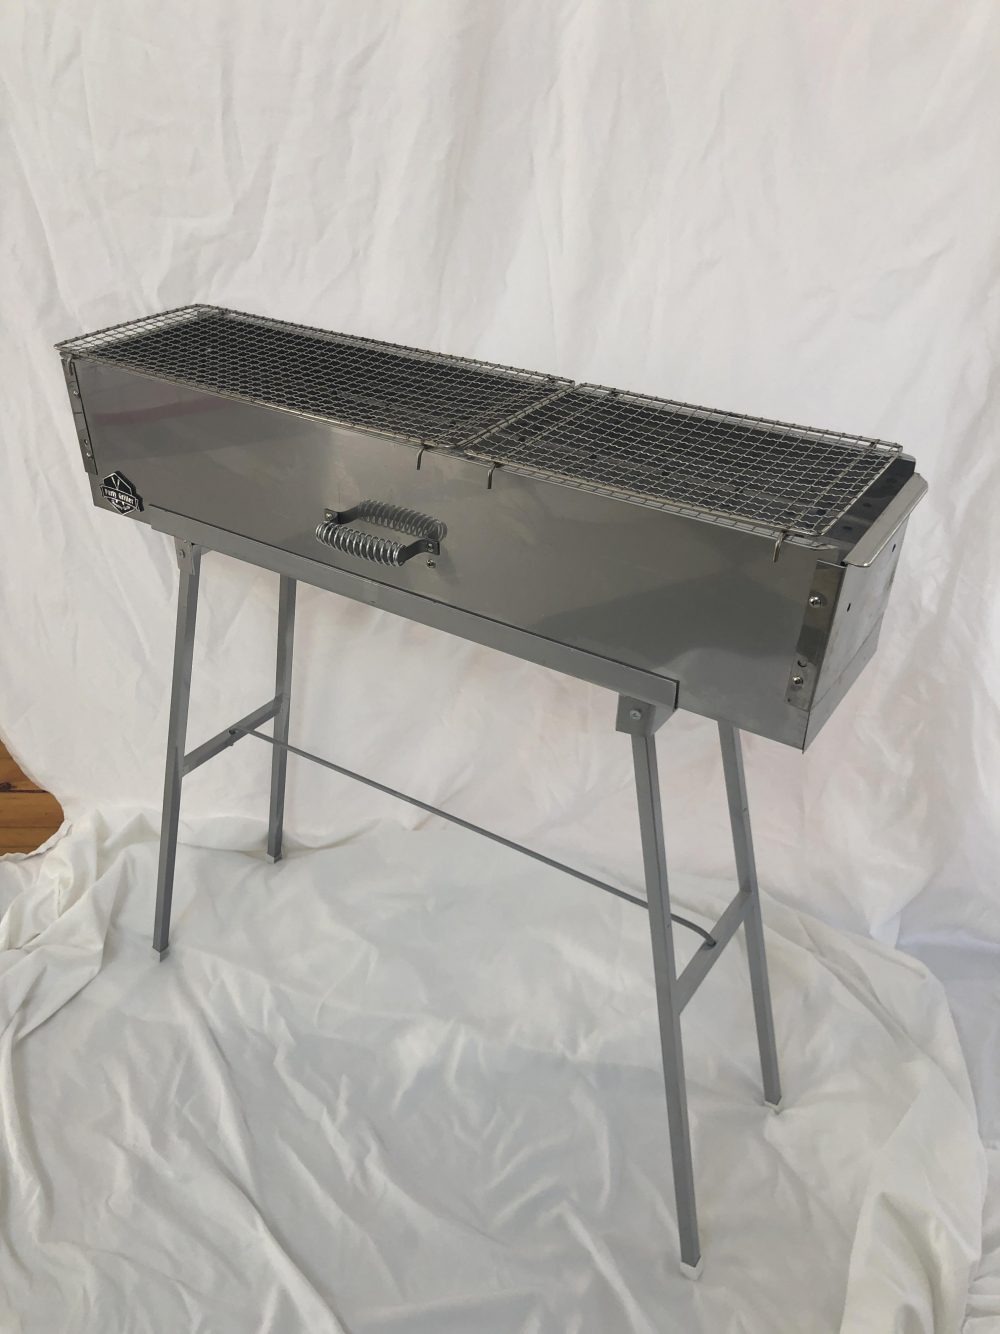 Long, rectangular grills allow for easy handling of food.